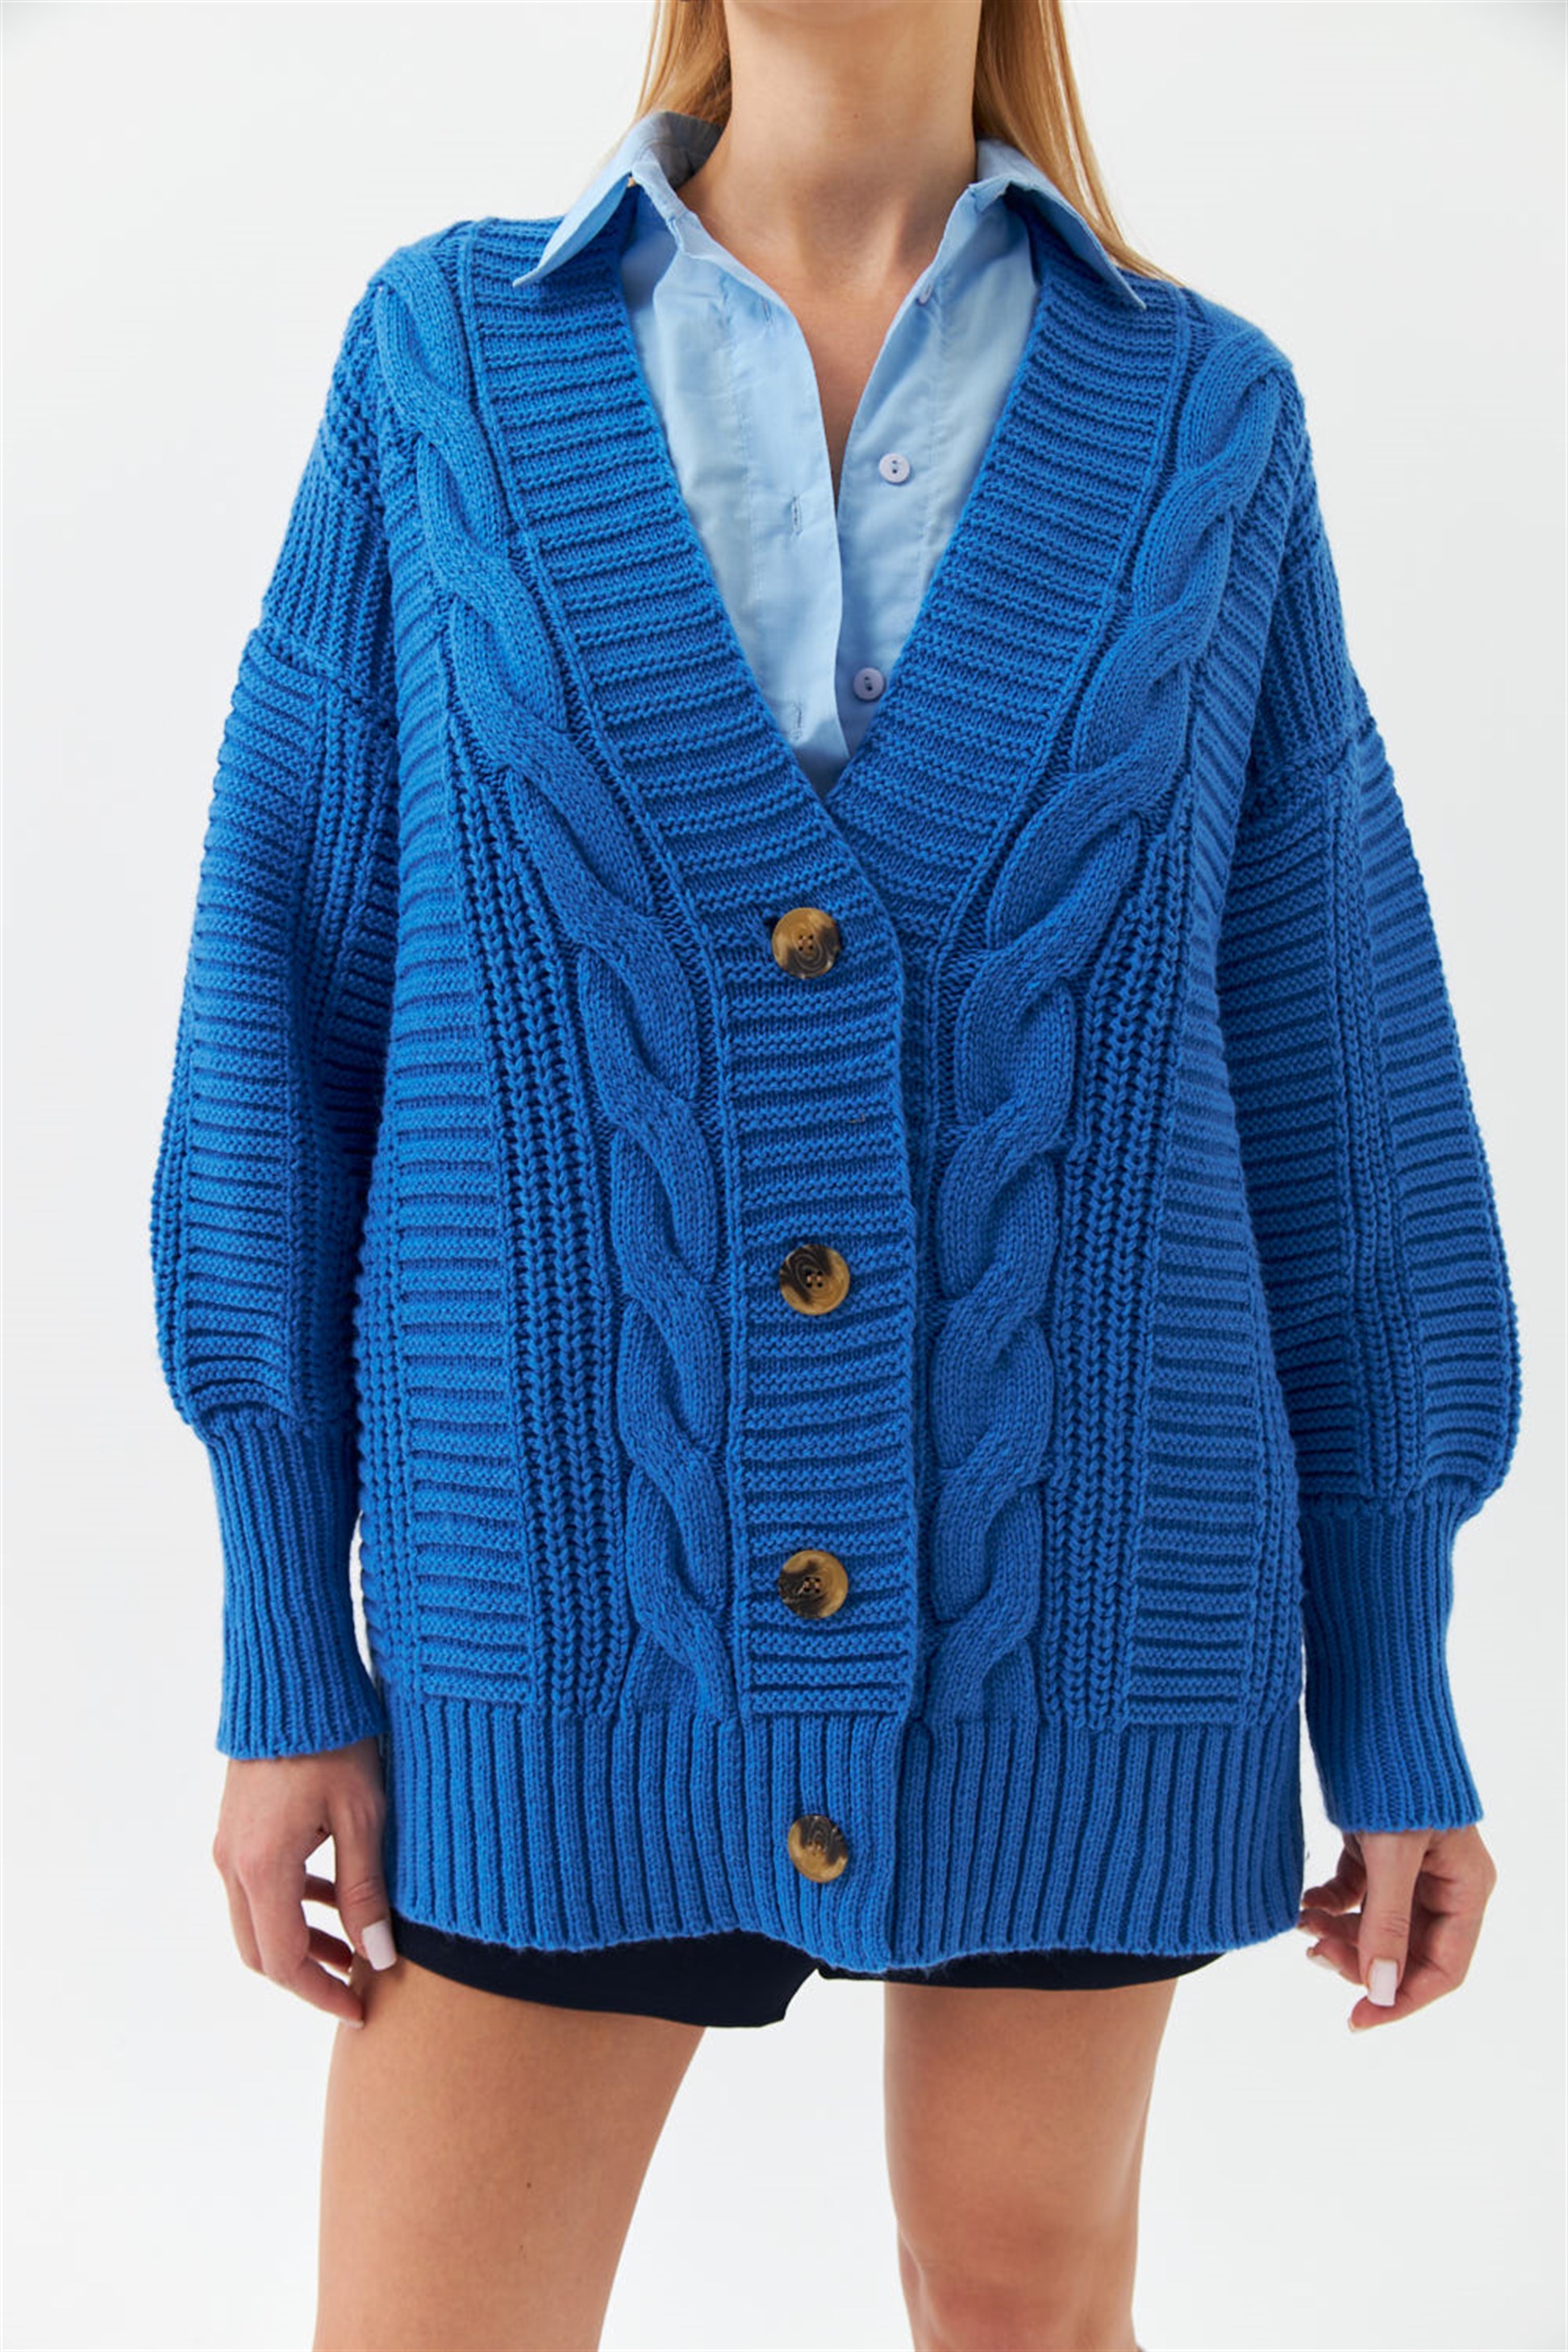 Rabatt 63 % Tintoretto Strickjacke DAMEN Pullovers & Sweatshirts Strickjacke Stricken Rosa 38 